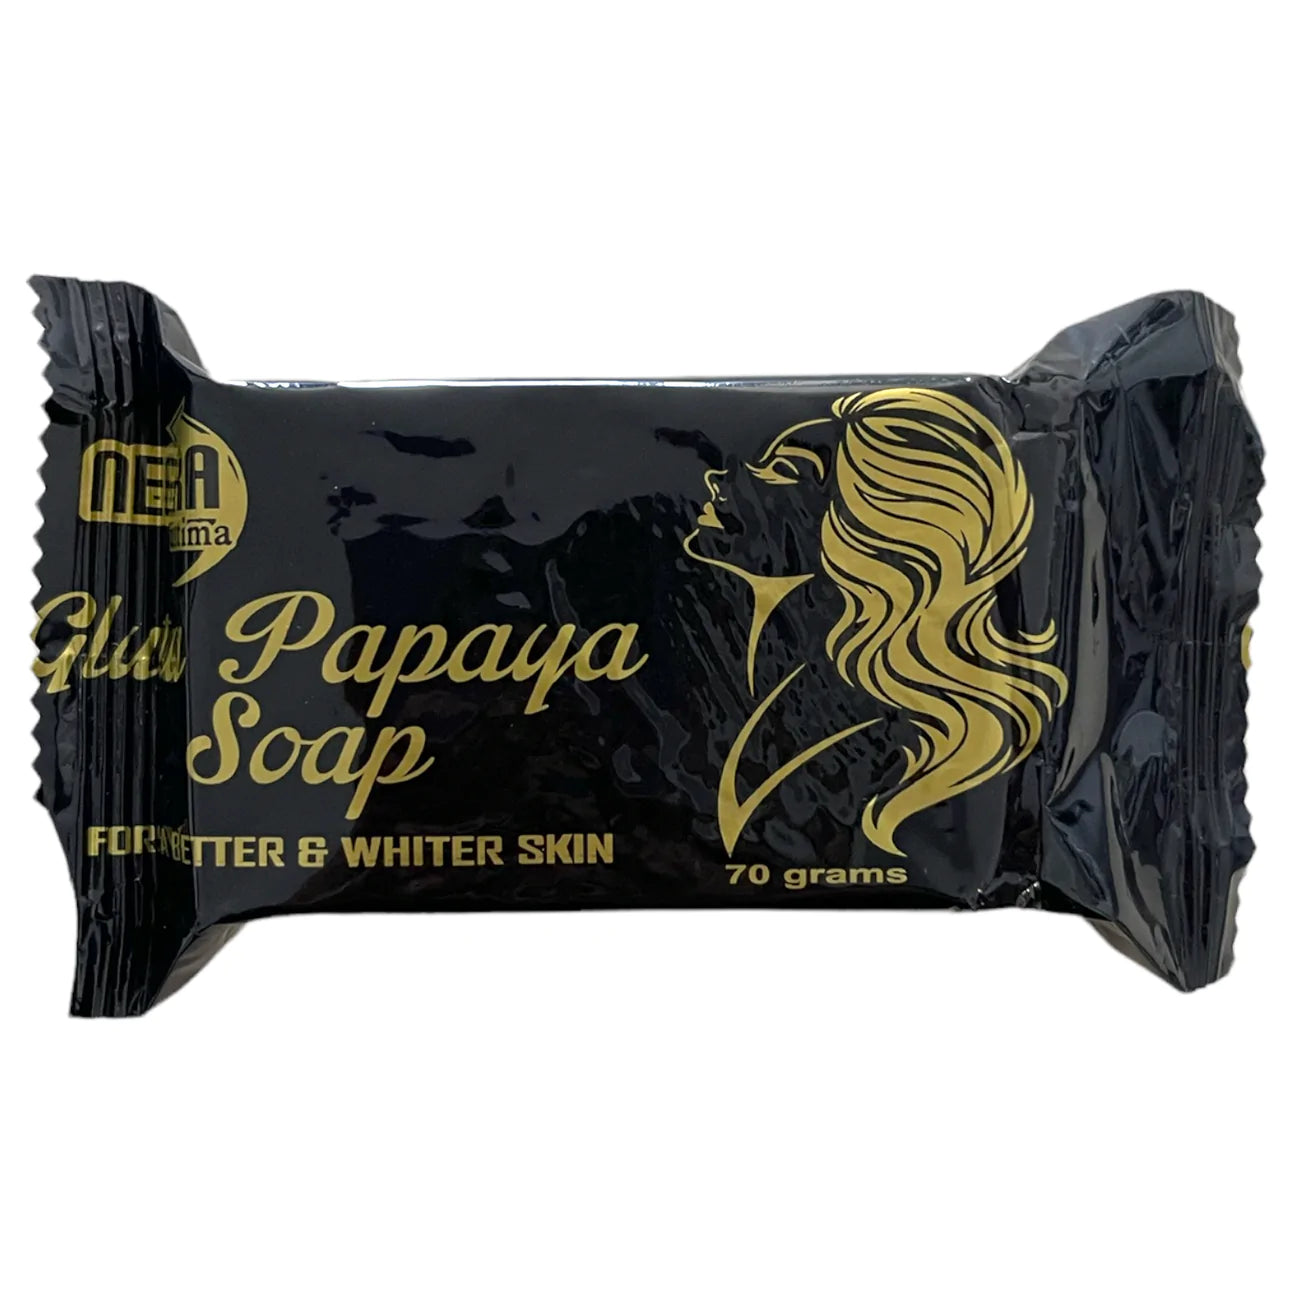 Negra Ultima Papaya Soap